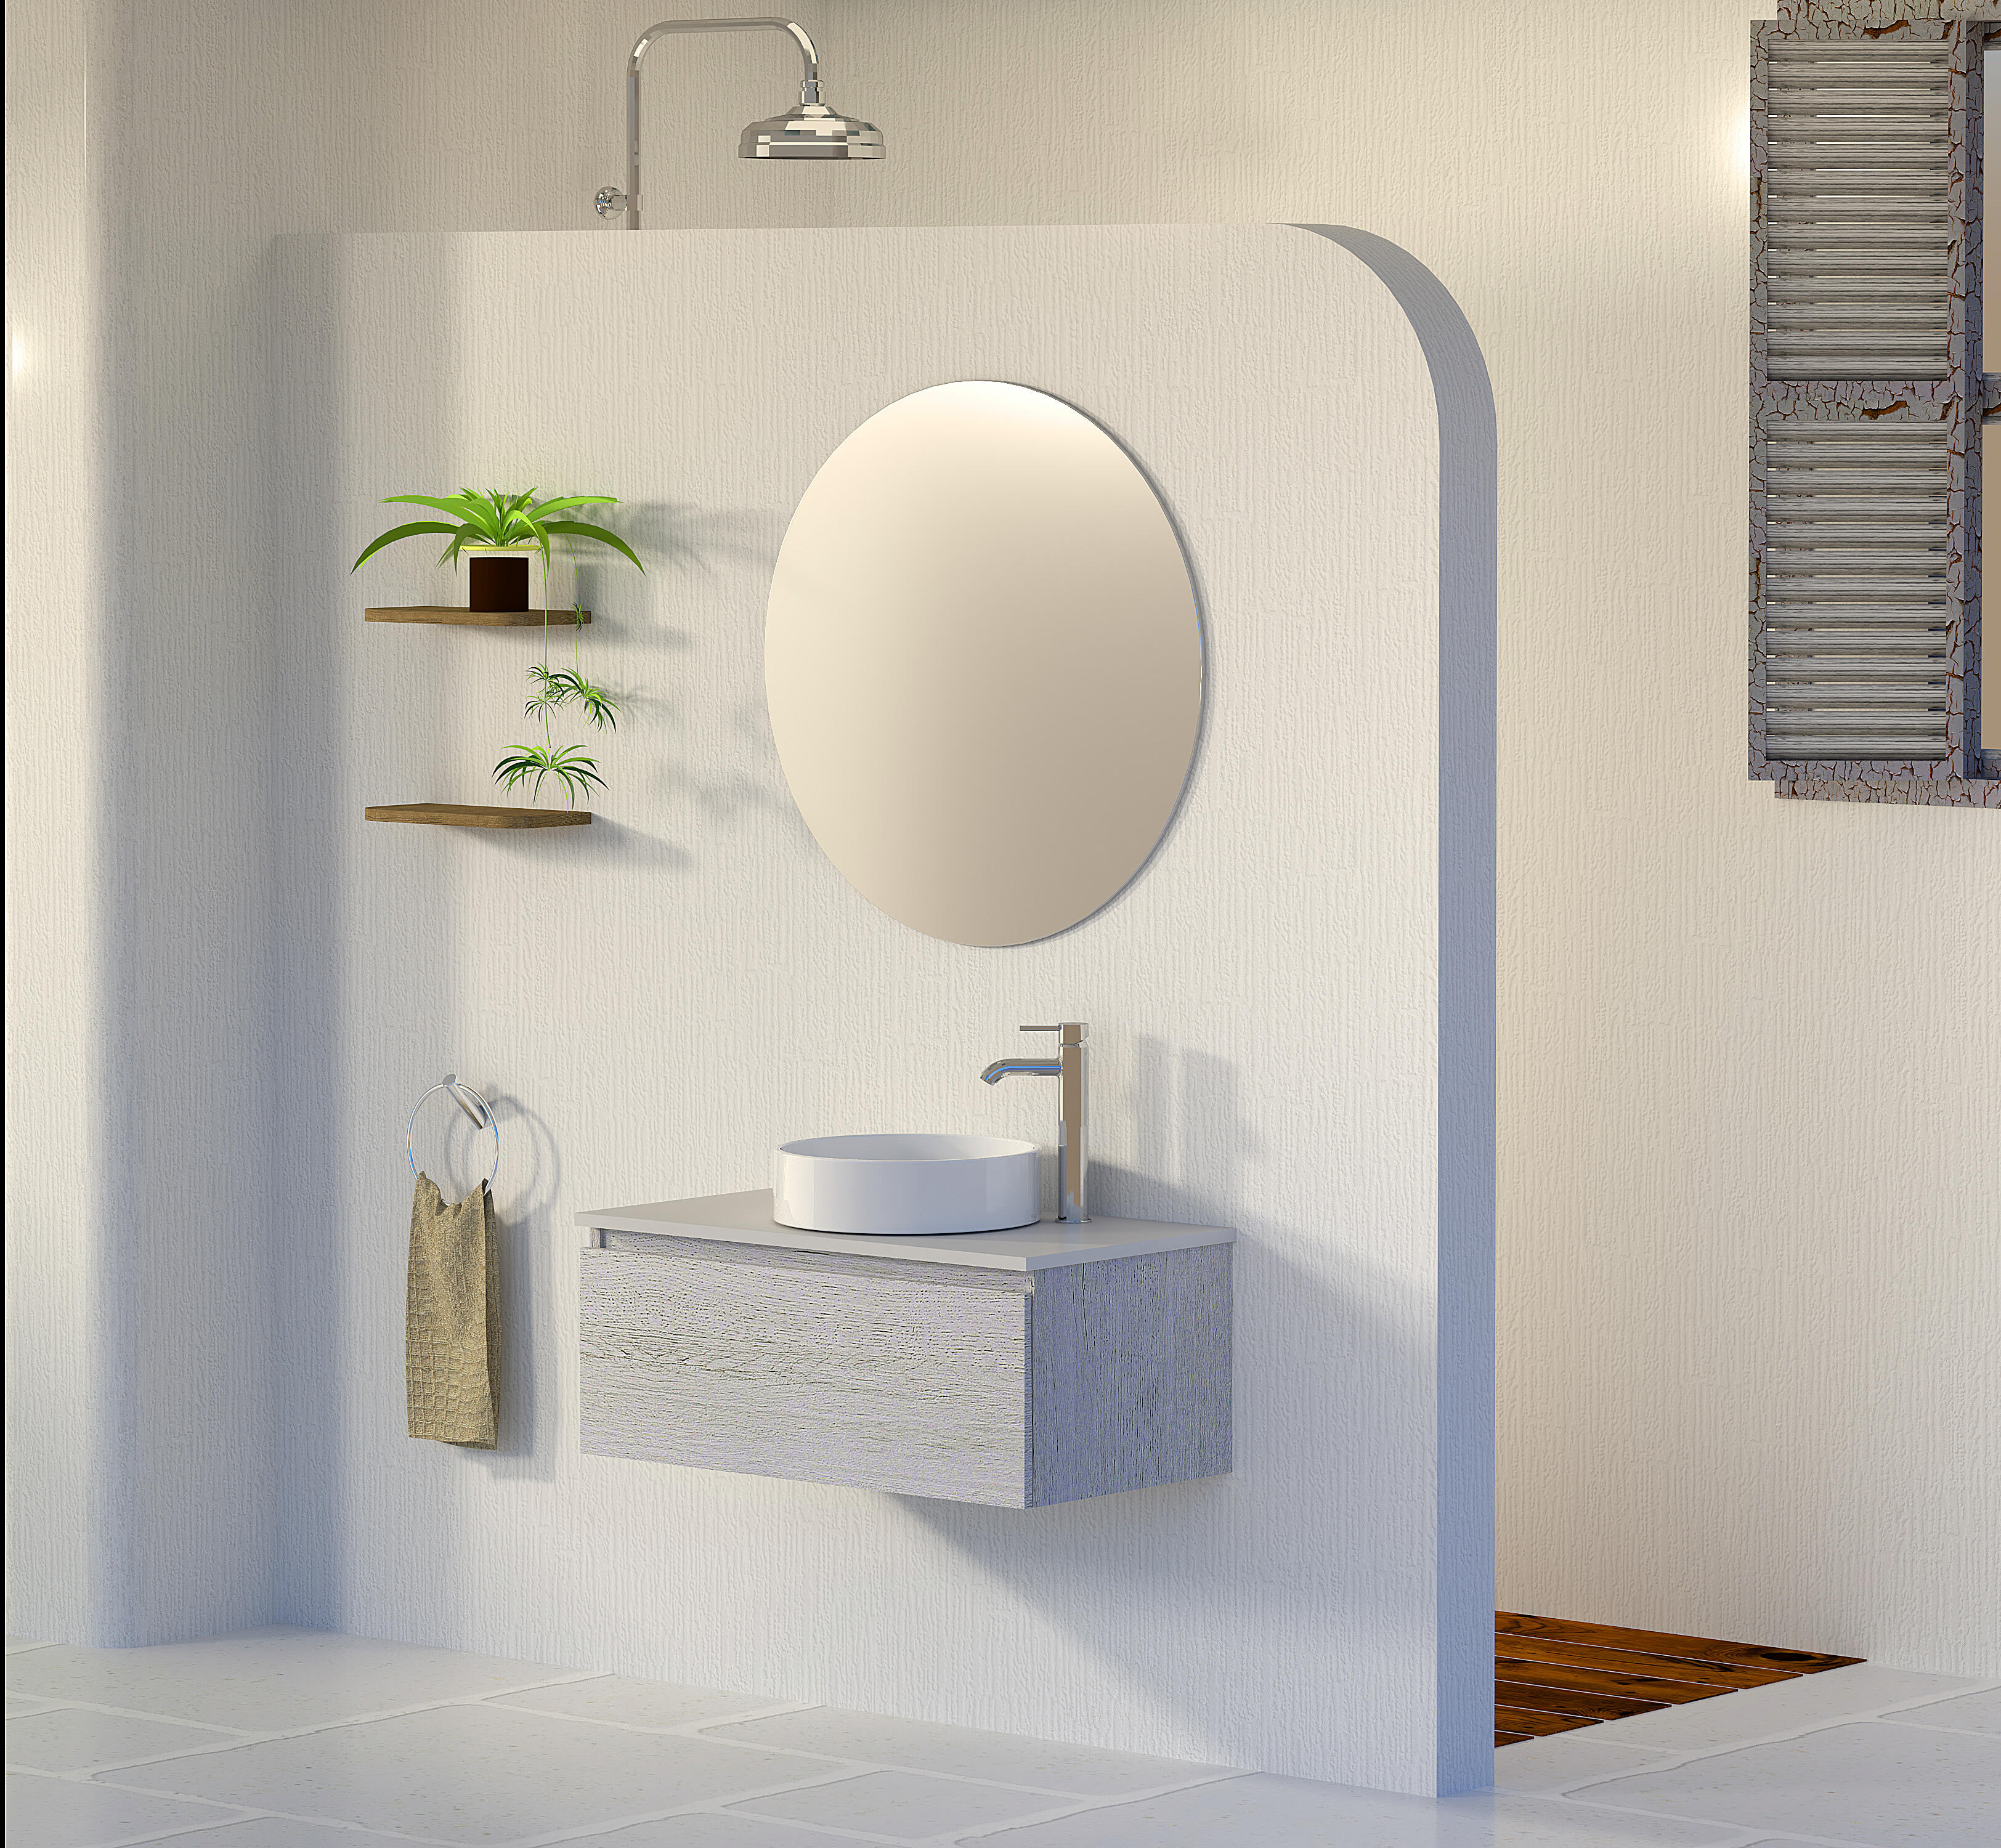 Mueble de baño con lavabo y espejo rise abedul 80x45 cm